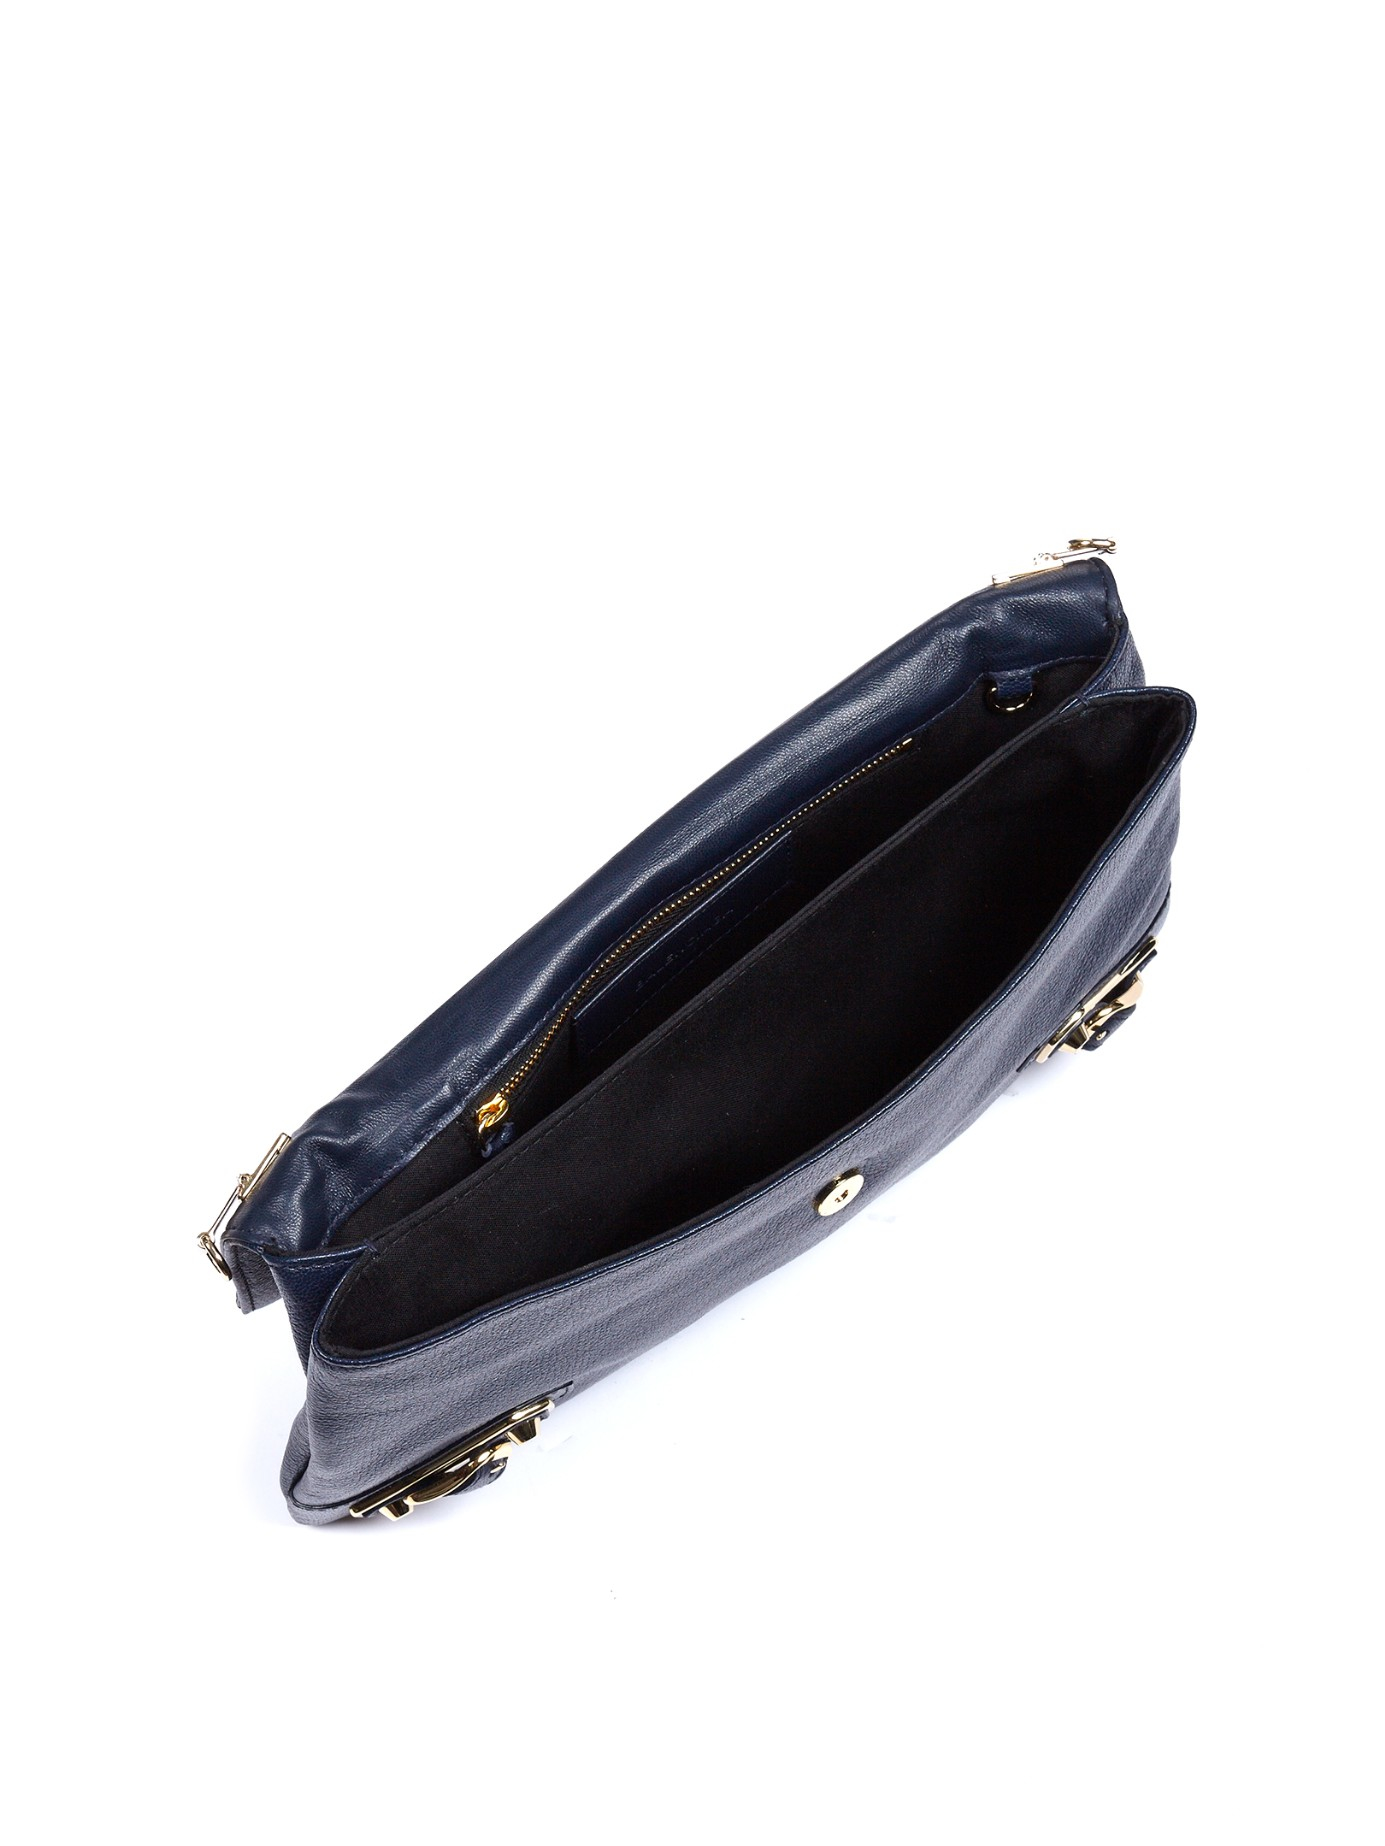 Balenciaga Classic Metallic-edge Leather Envelope Clutch in Navy 